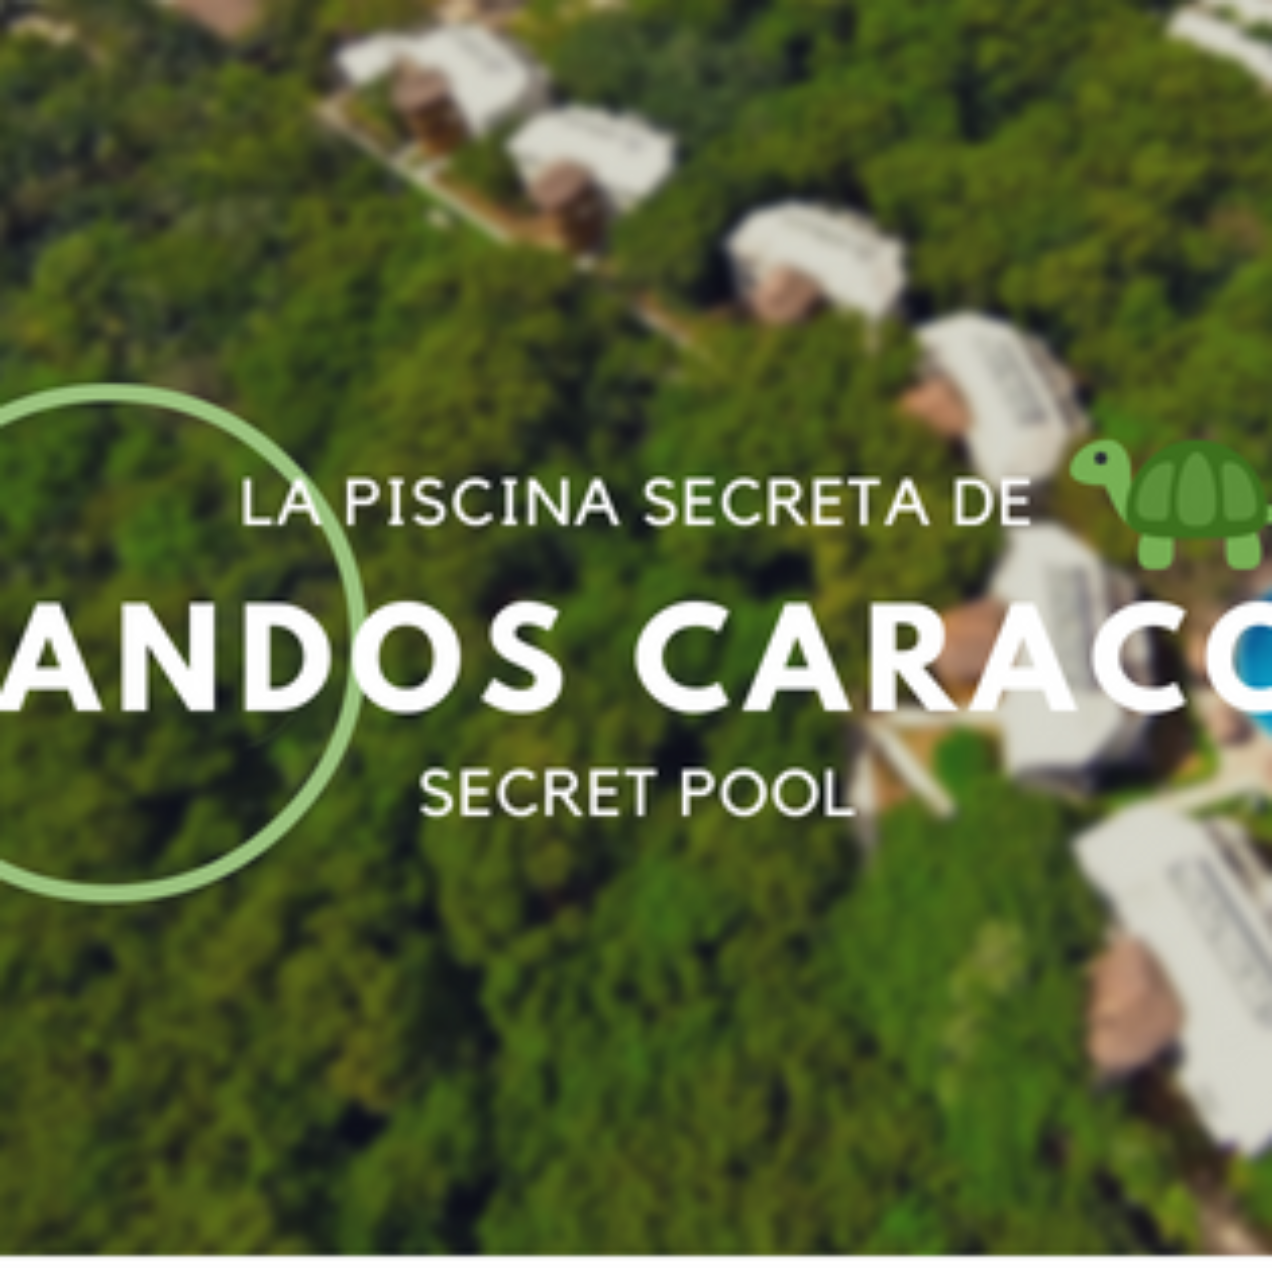 The Secret Pool at Sandos Caracol